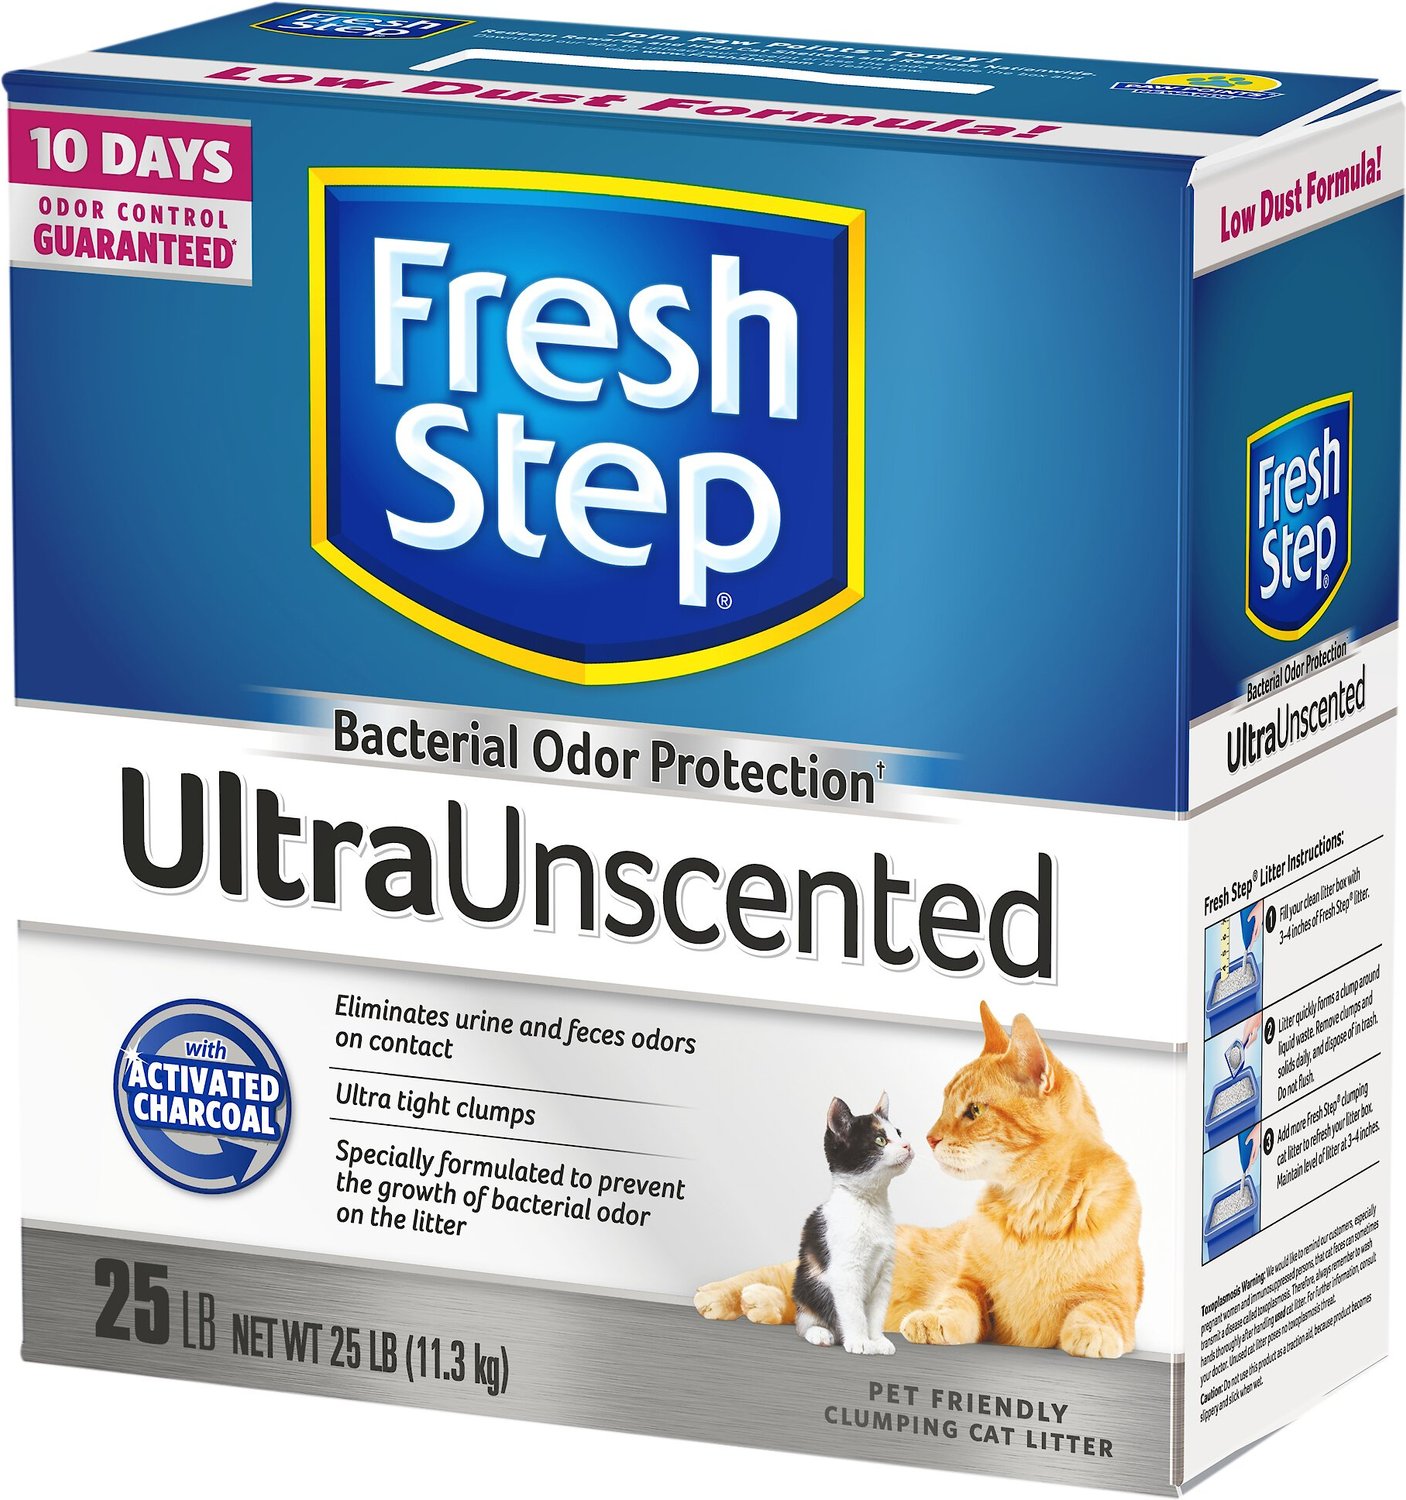 Fresh Step Ultra Unscented Cat Litter, 25lb box